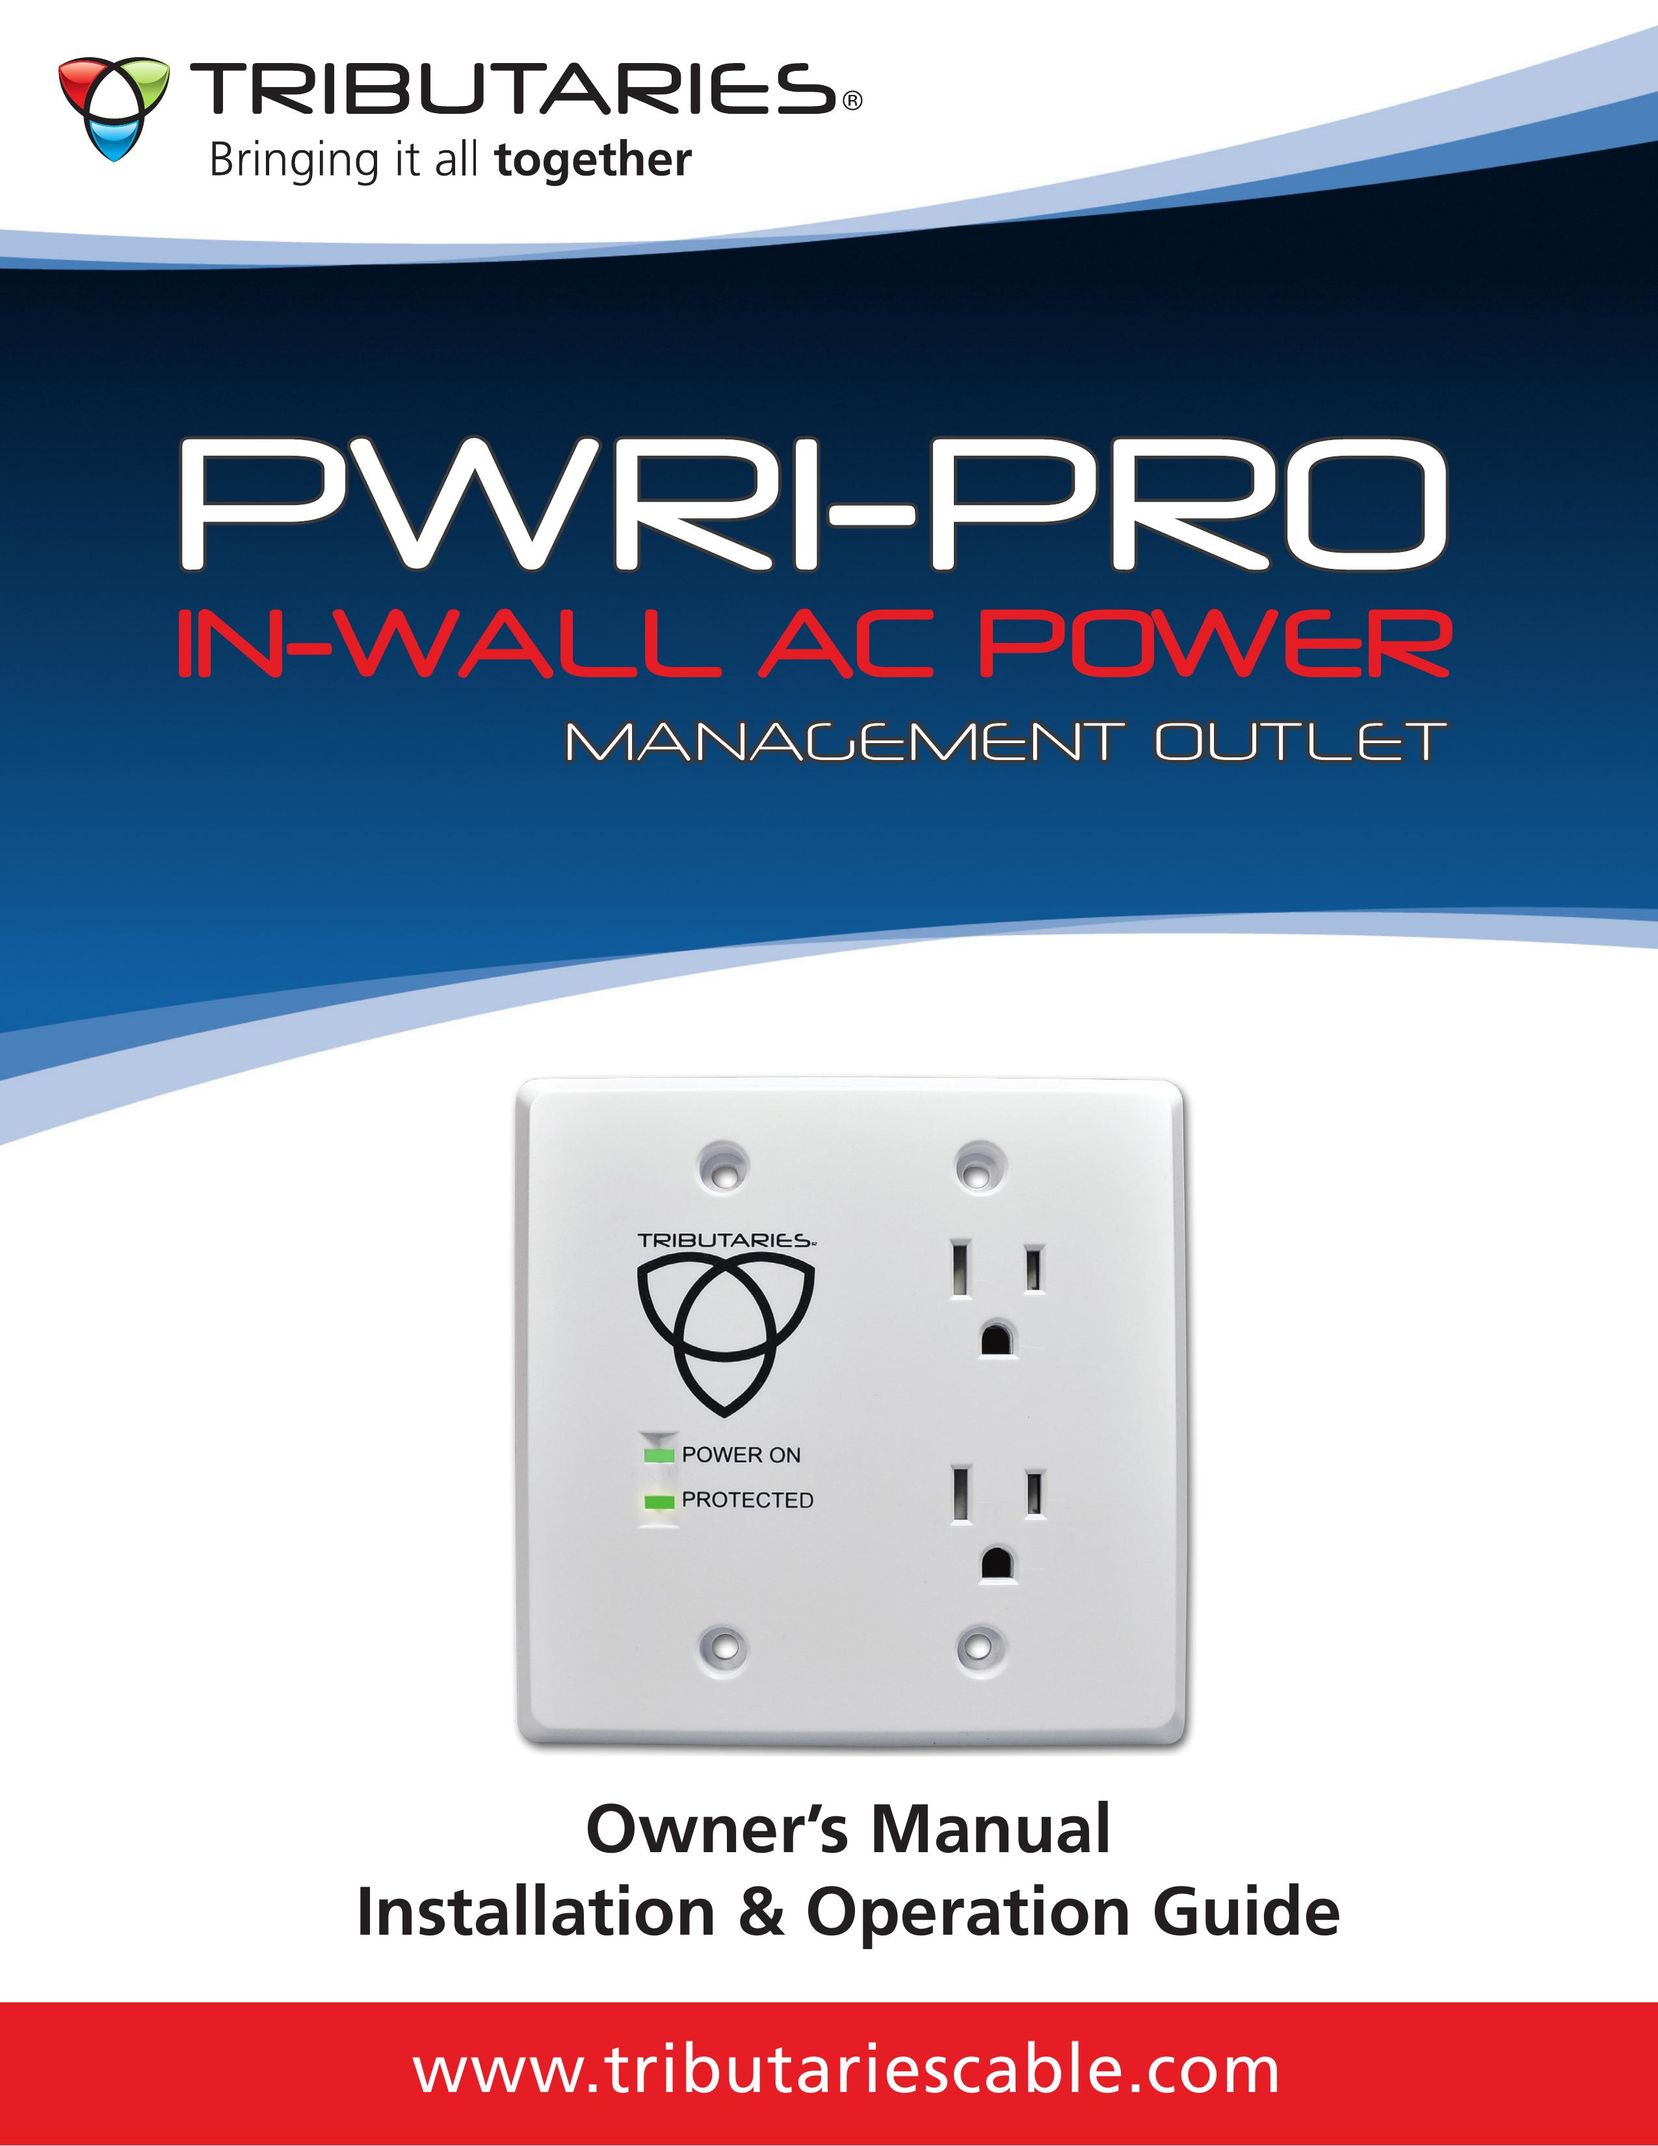 Tributaries PWRI-PRO Surge Protector User Manual